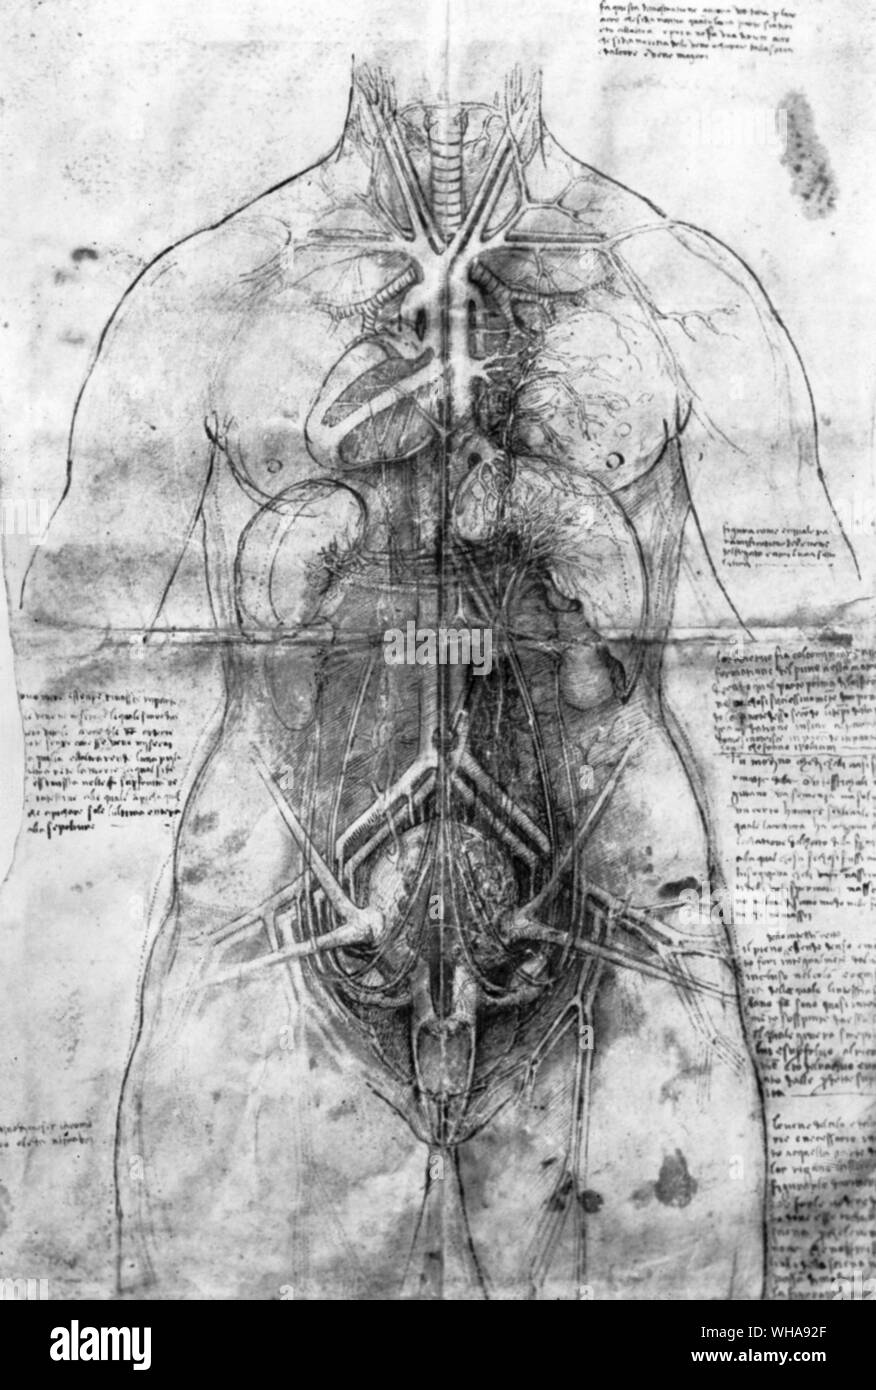 Anatomical diagram of a human body. Stock Photo